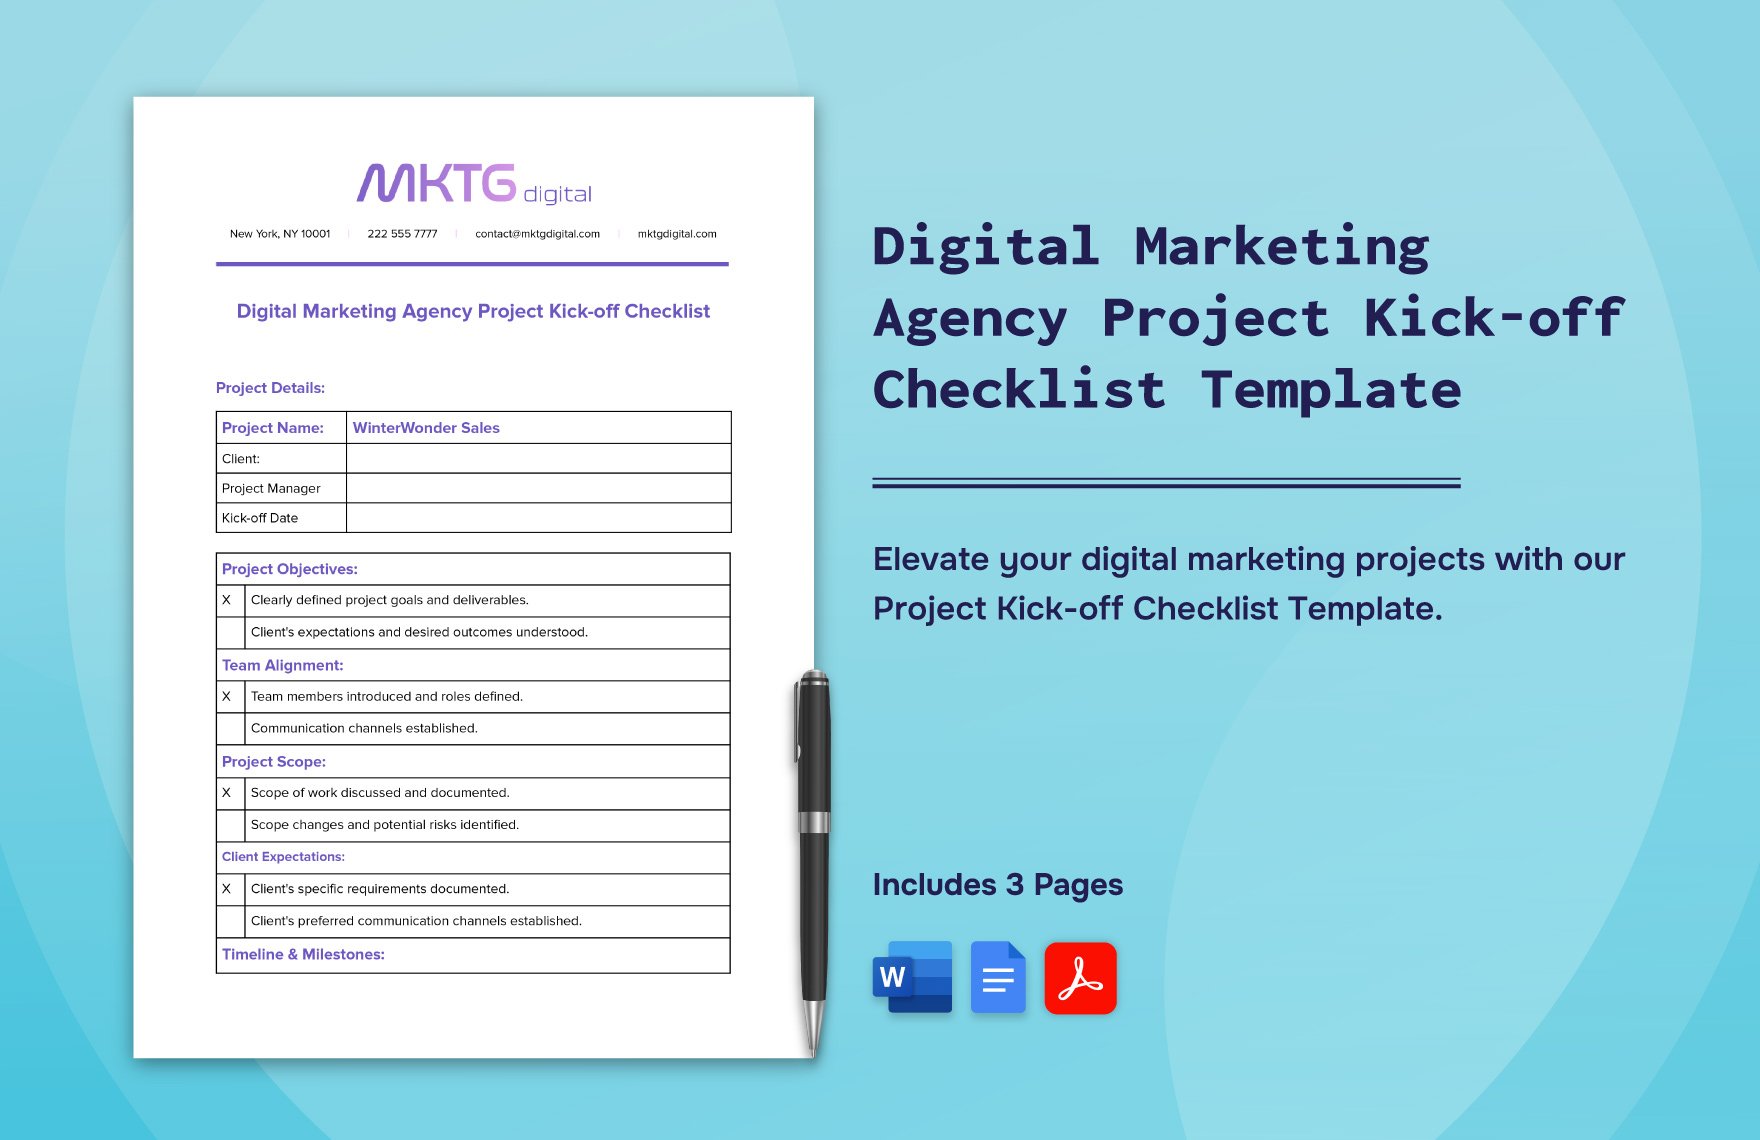 Digital Marketing Agency Project Kick-off Checklist Template